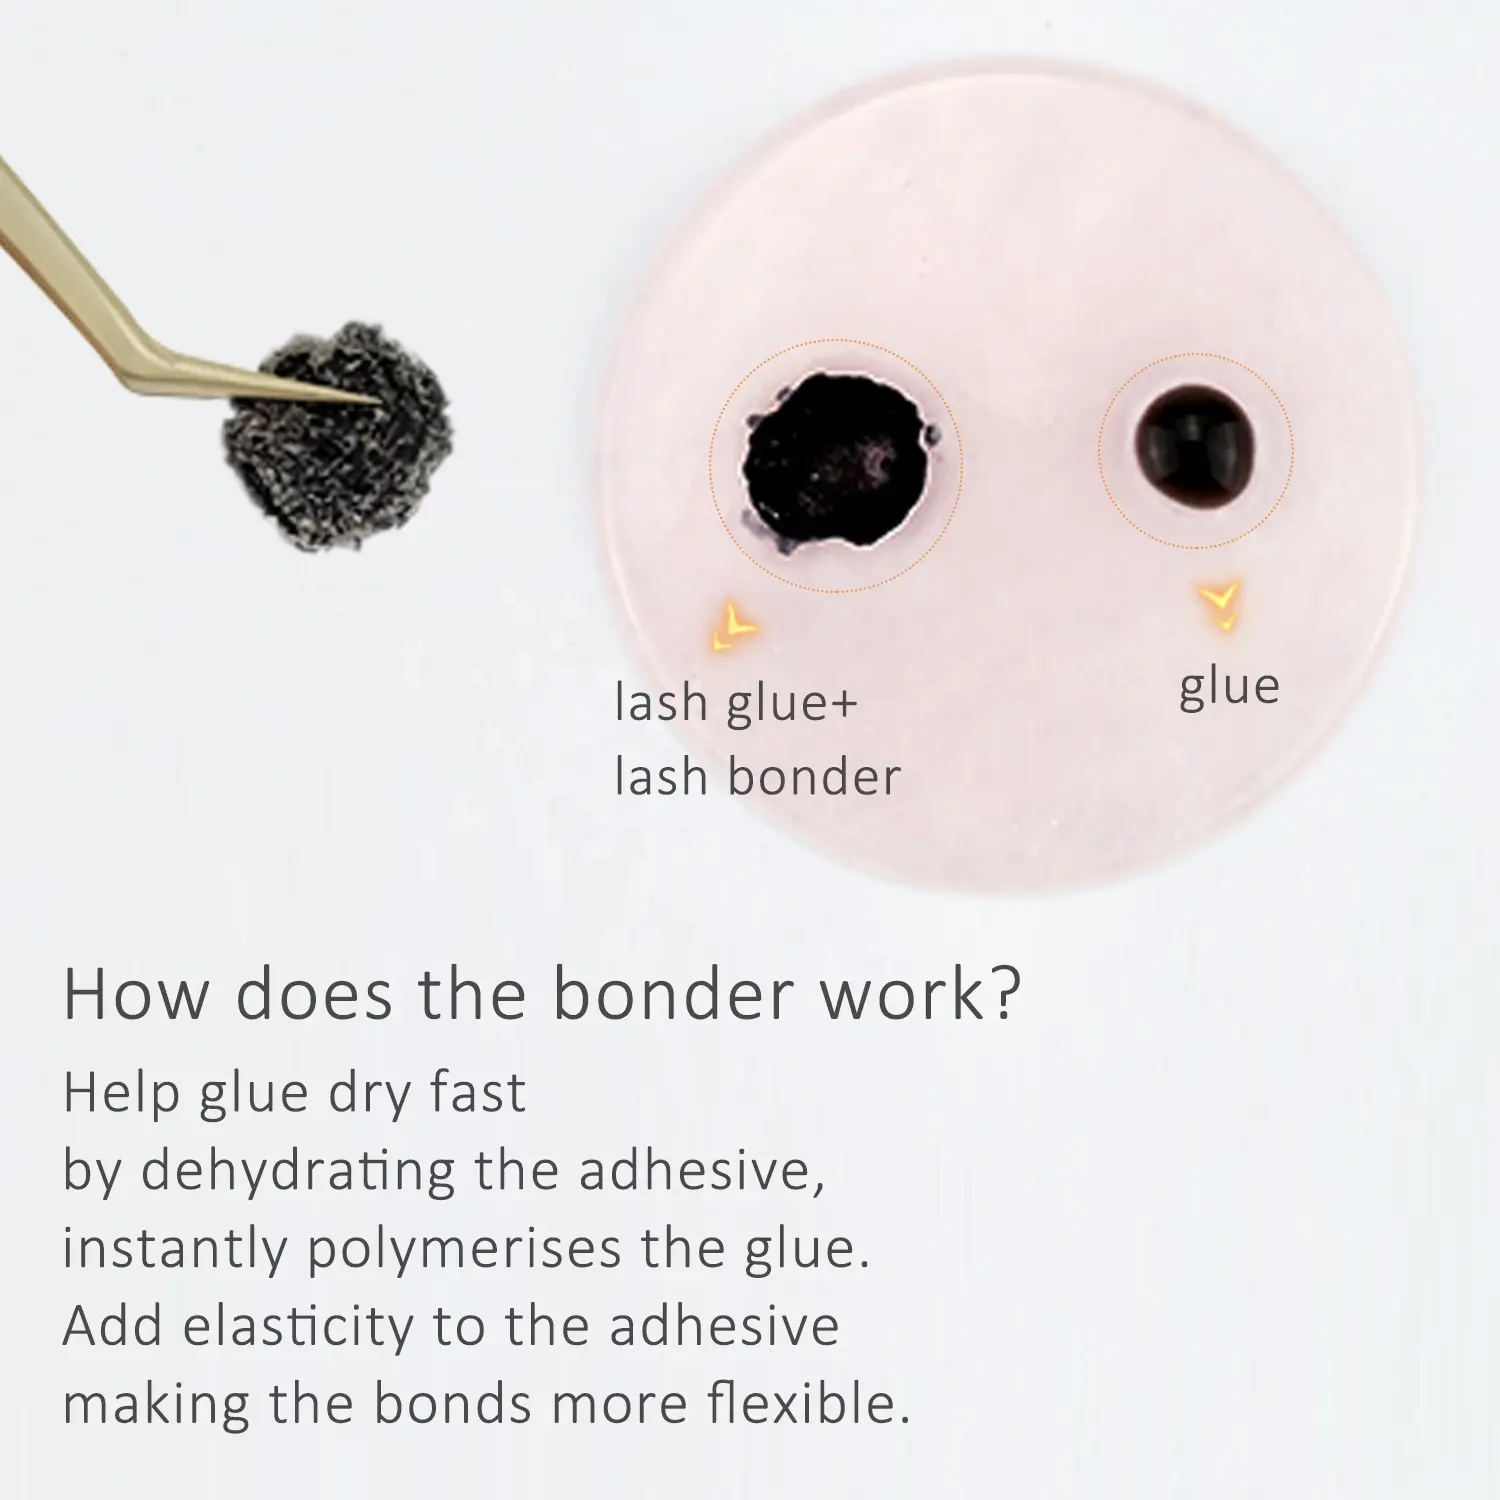 Lash bonder Increase lashes retention time High quality Reduce irritation Easy to use